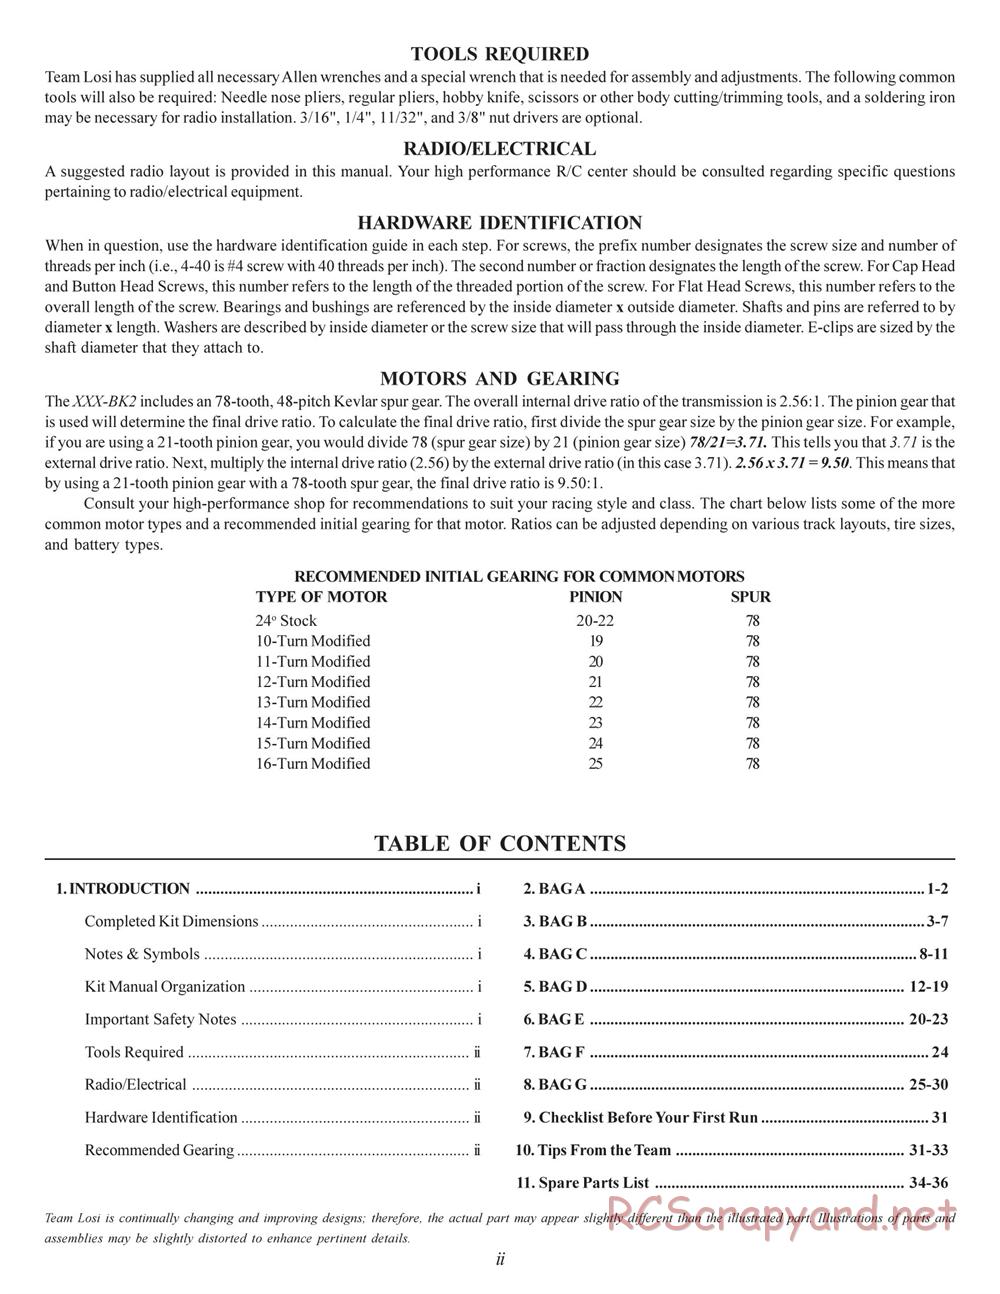 Team Losi - XXX BK2 - Kinwald Edition - Manual - Page 4